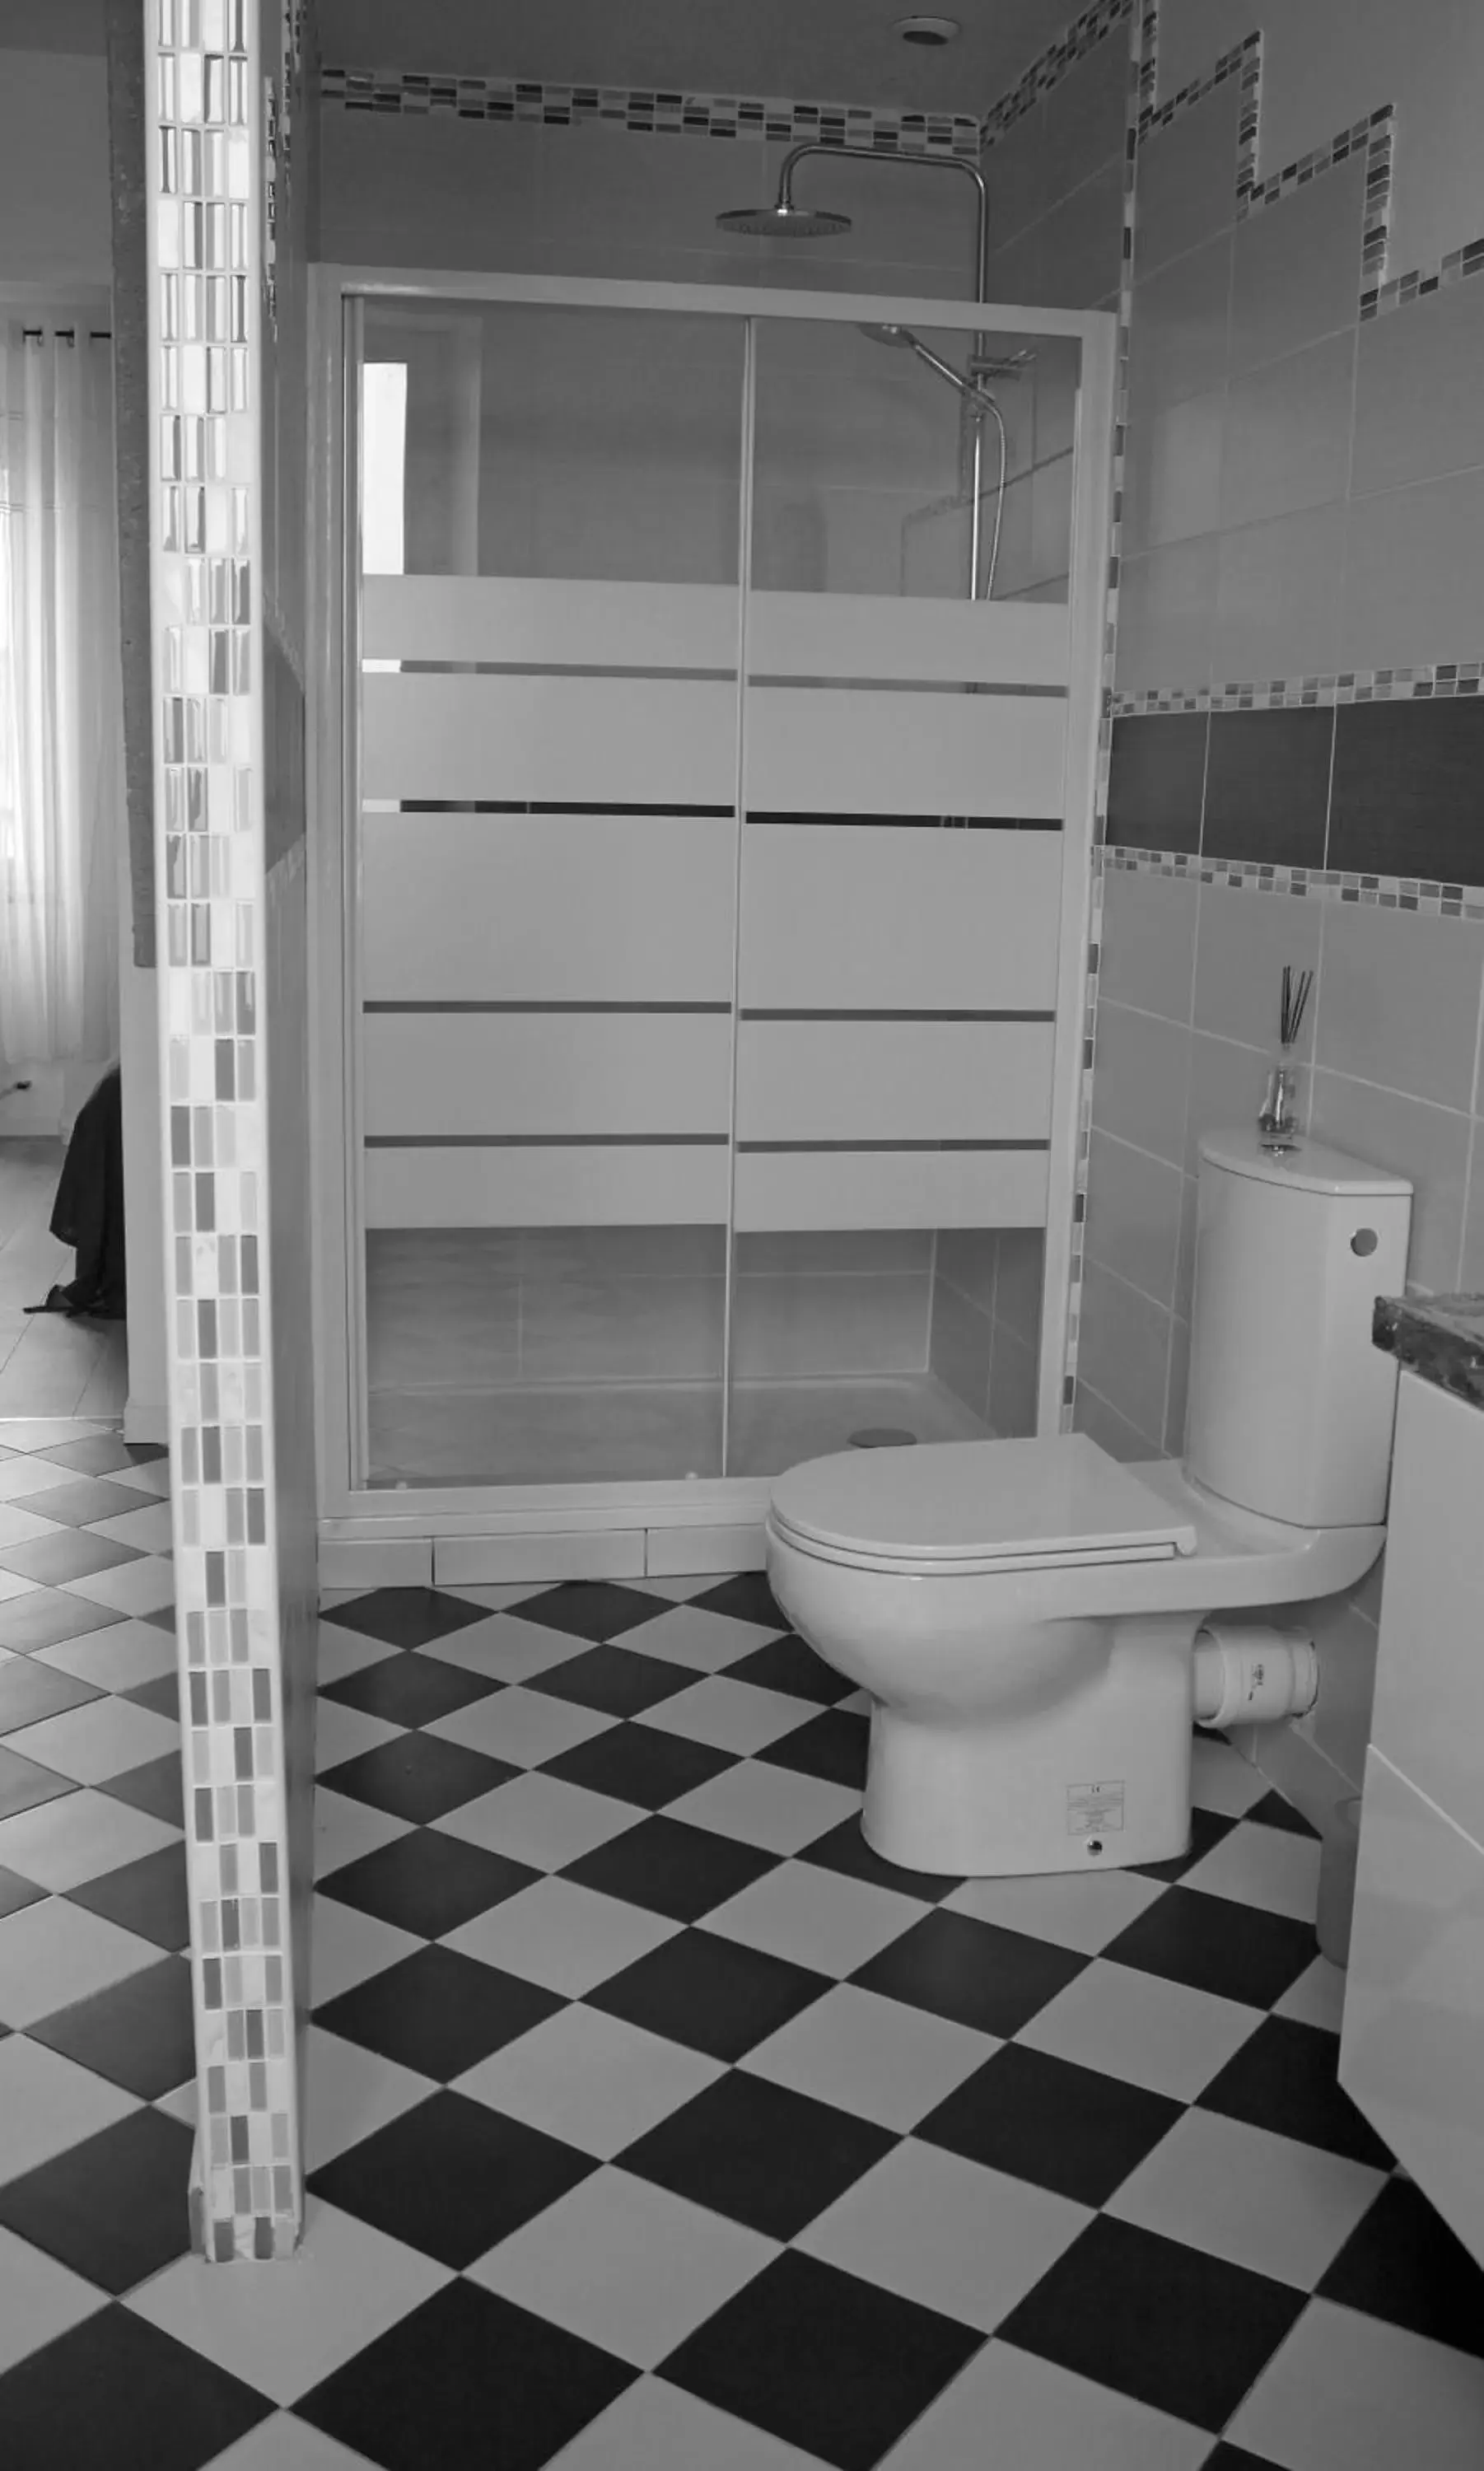 Toilet, Bathroom in BnB Maison d'Art